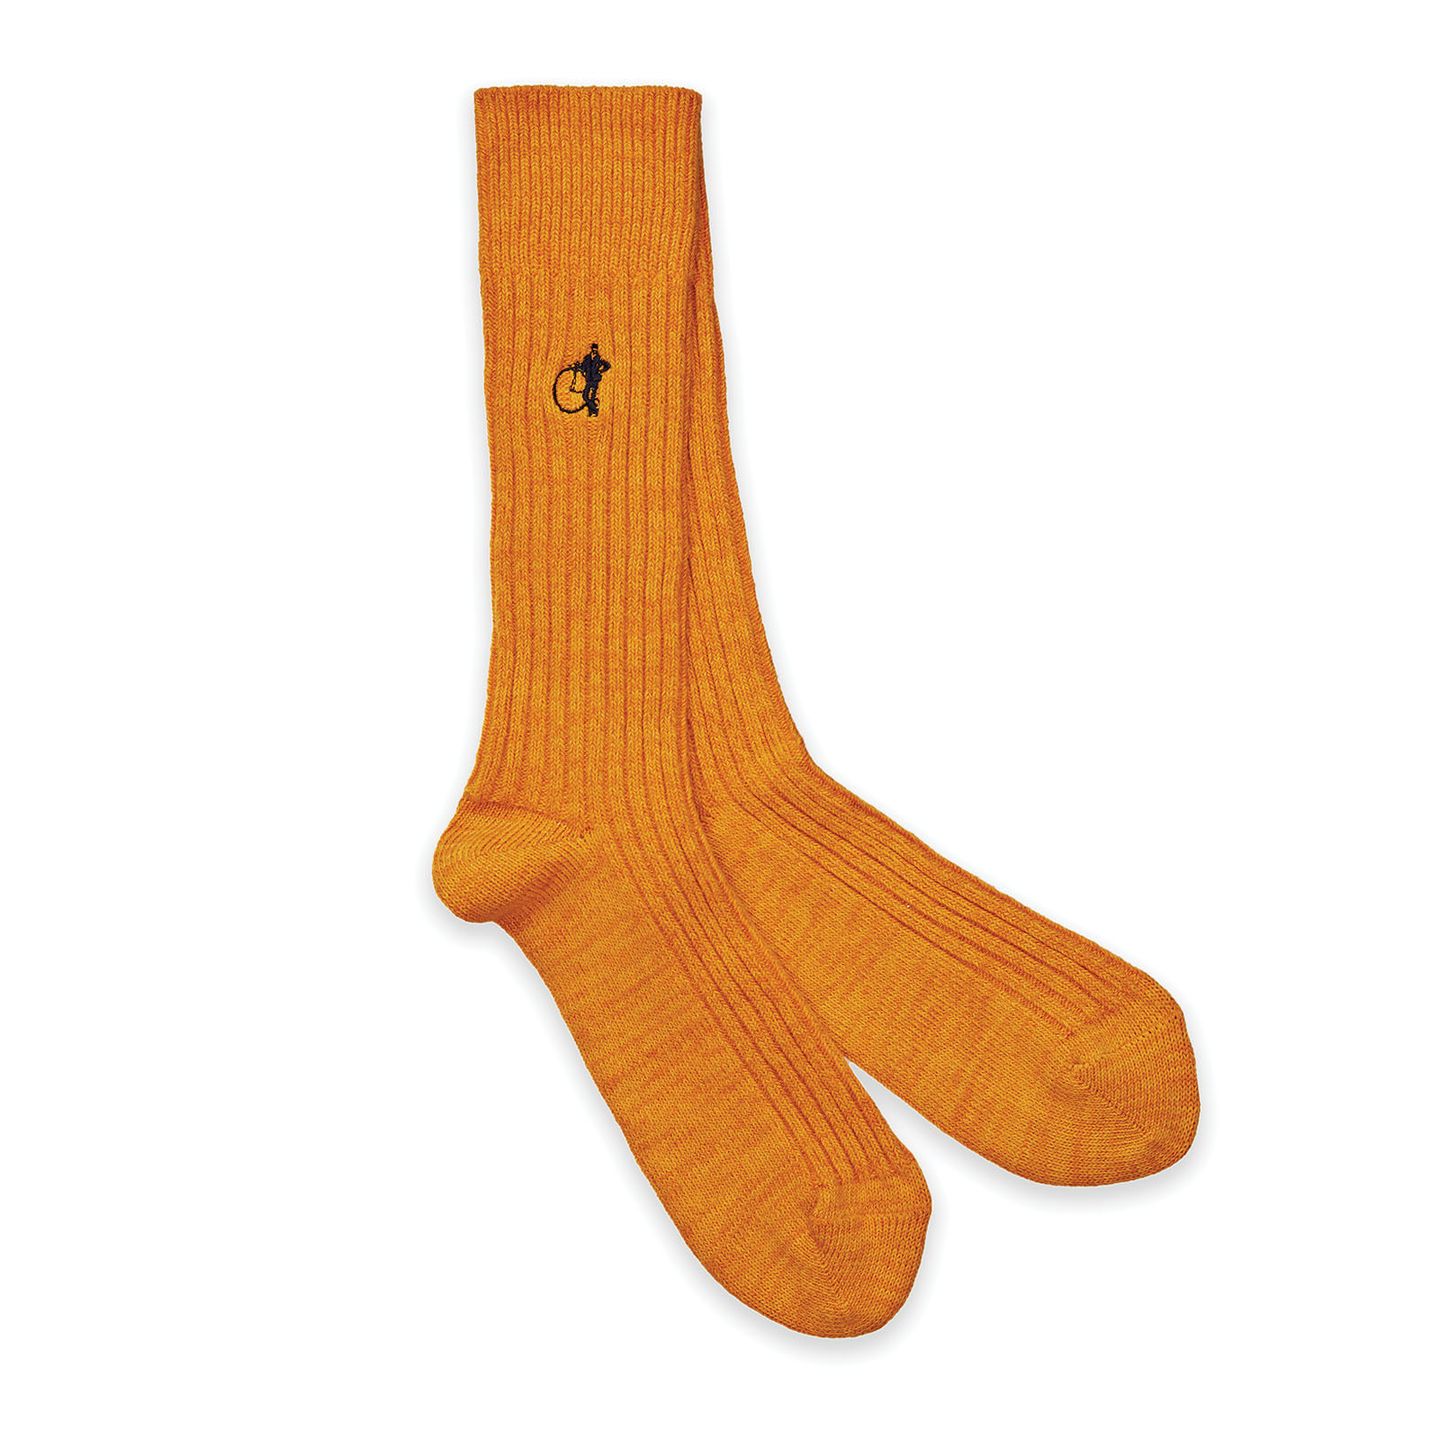 Boots socks in the colour East India Saffron